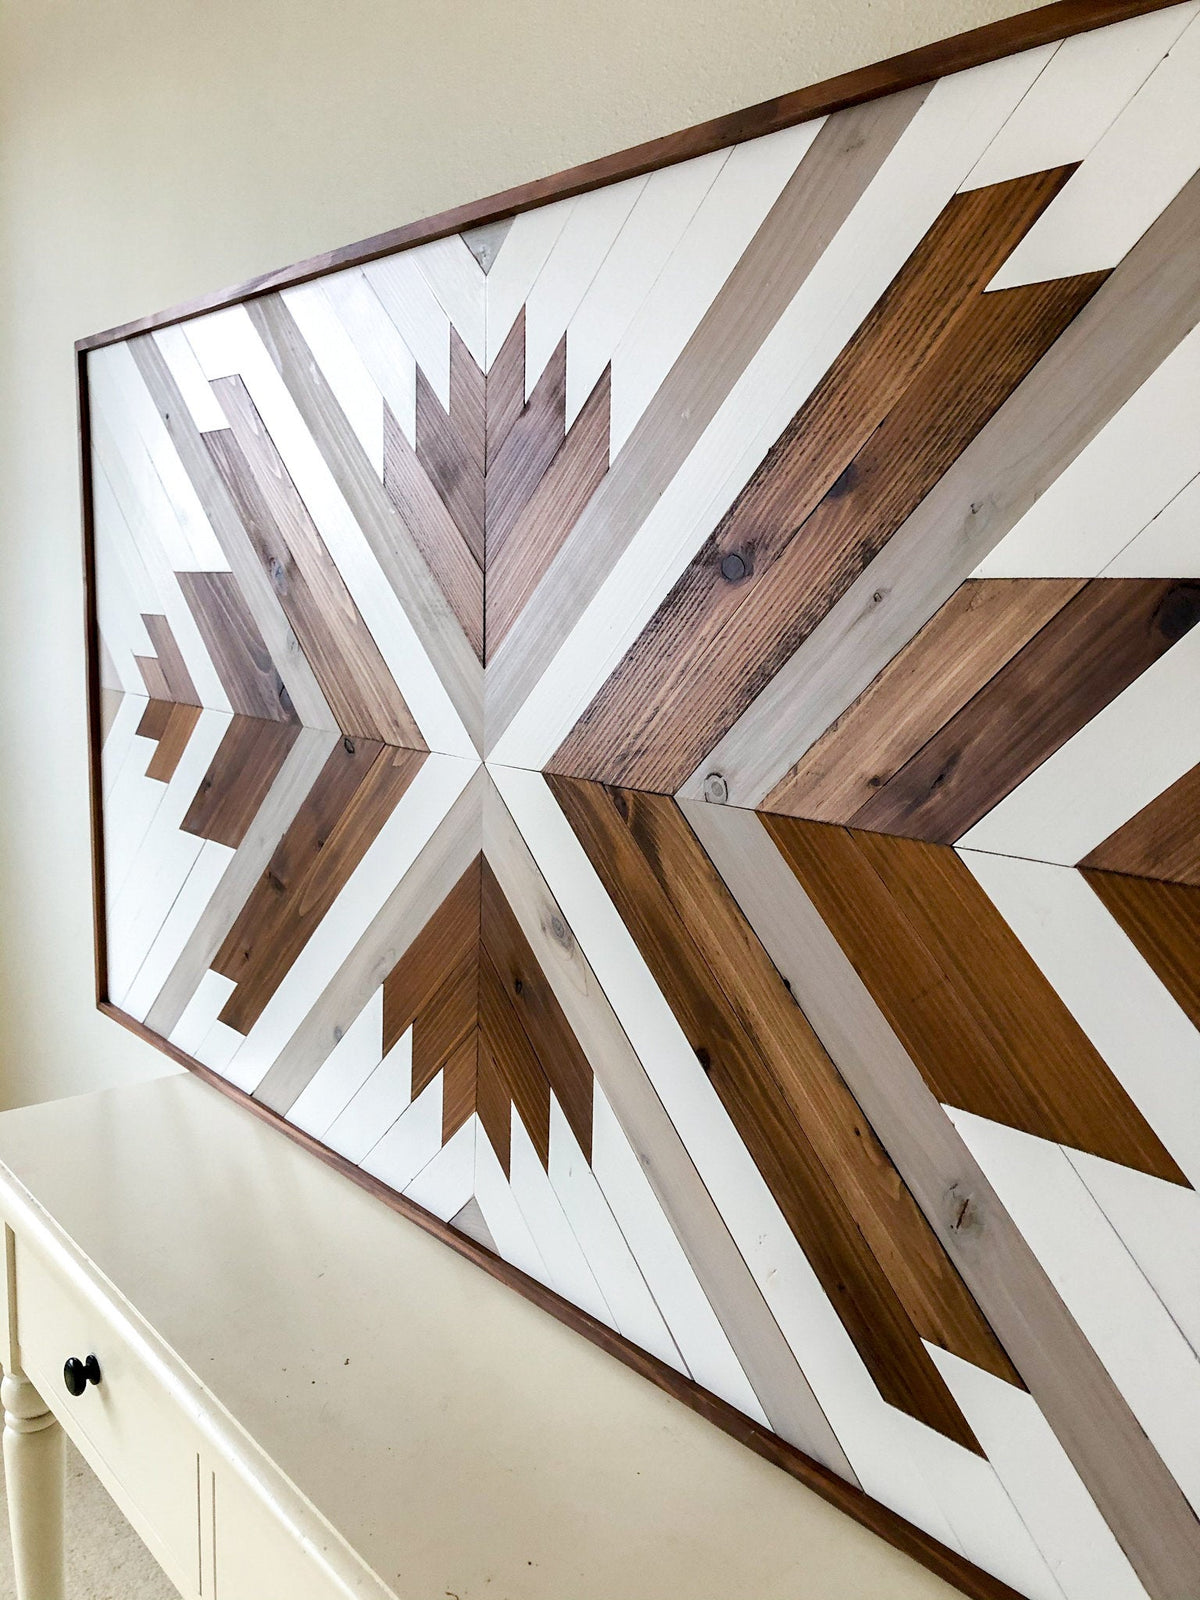 CASIMIRO in Dove Grey - Wood Wall Art - Wooden Wall Art - Geometric Wood Art - Wooden Wall Art Hanging - Modern Wood Art - Boho Wood Art